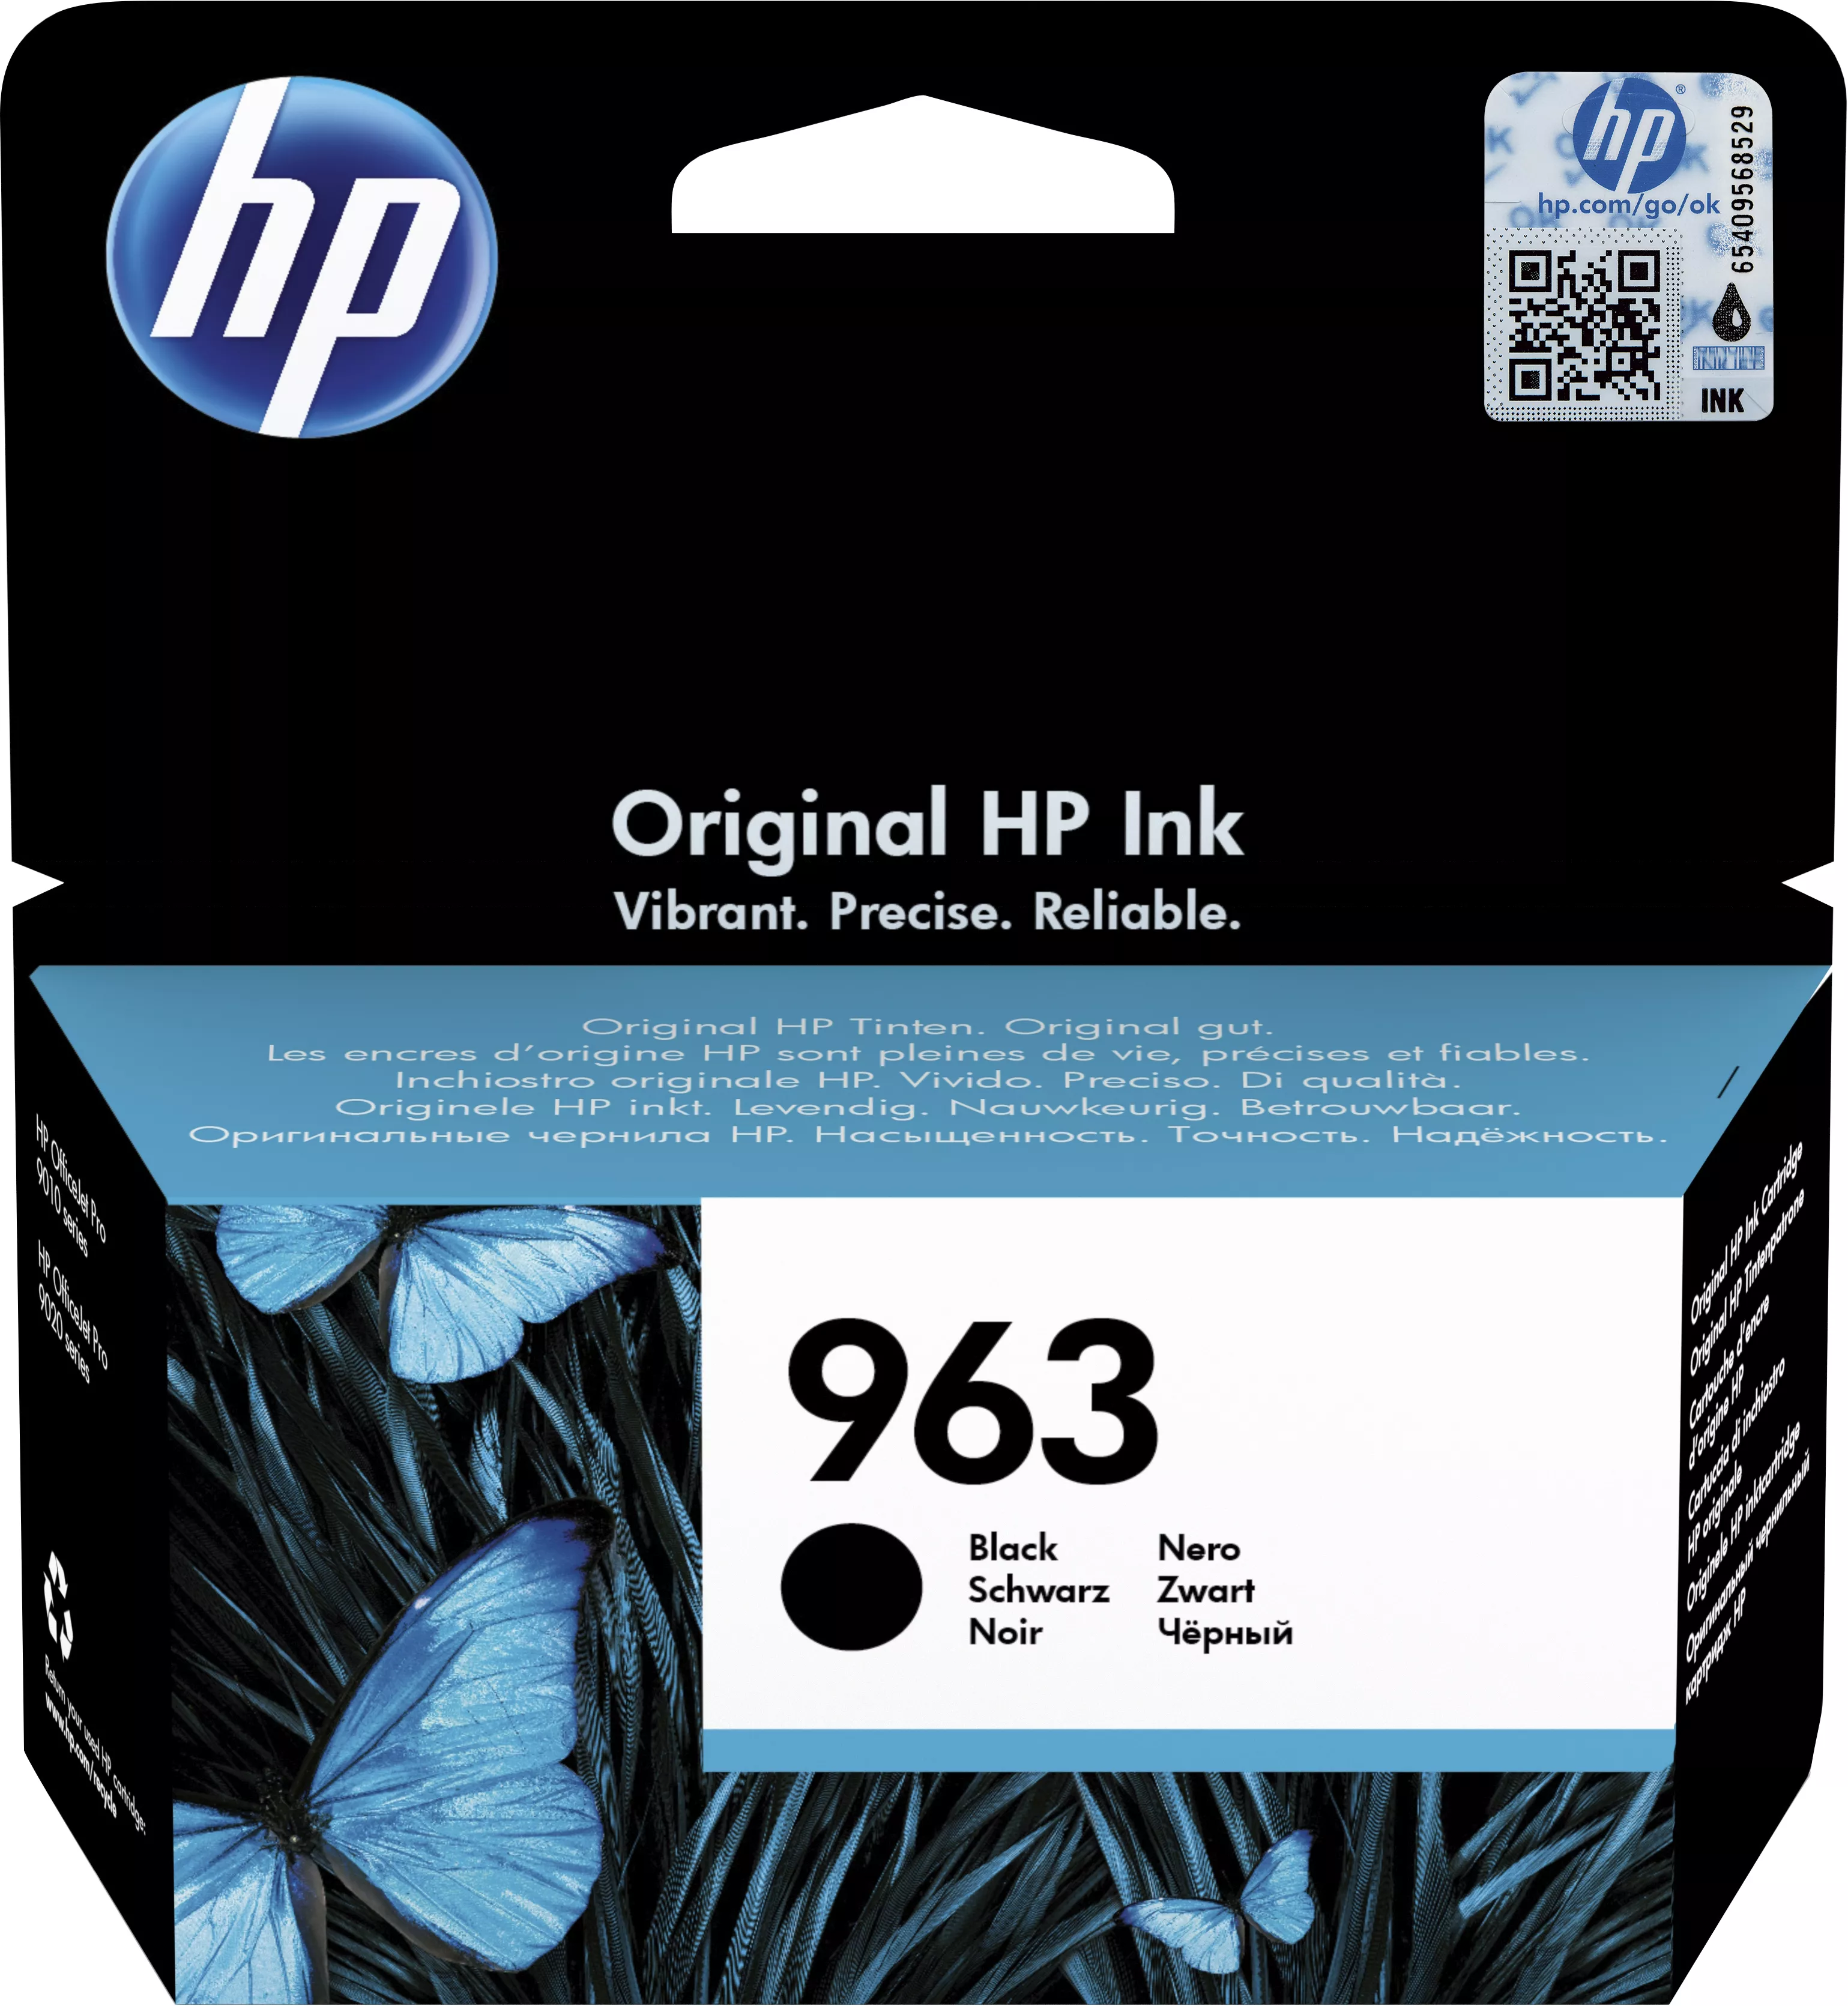 Vente Cartouches d'encre HP 963 Black Original Ink Cartridge